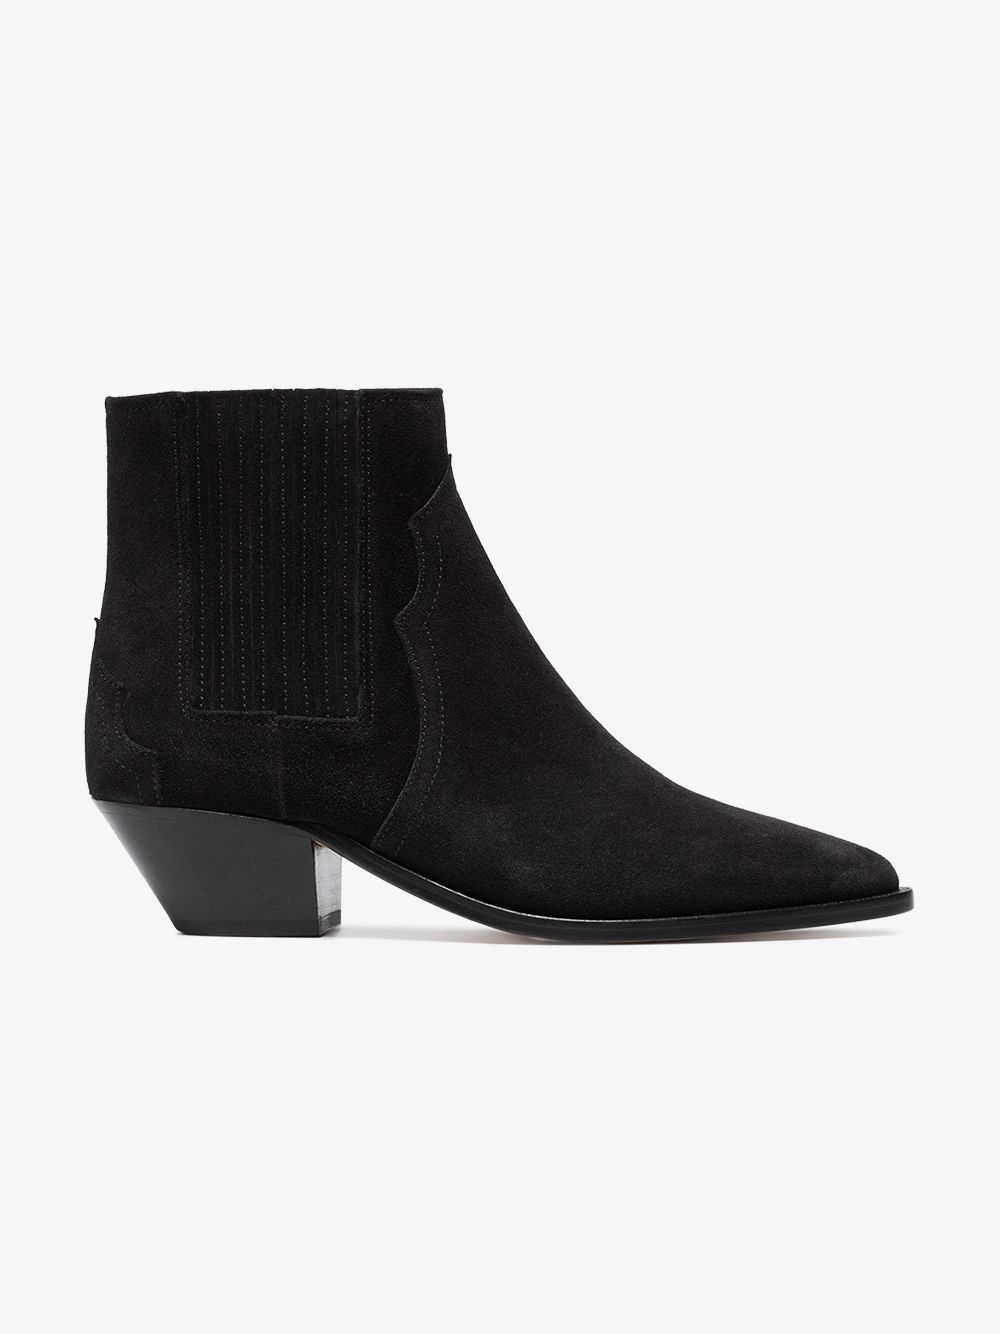 Isabel Marant Black Derlyn 40 Suede ankle boots | Browns Fashion